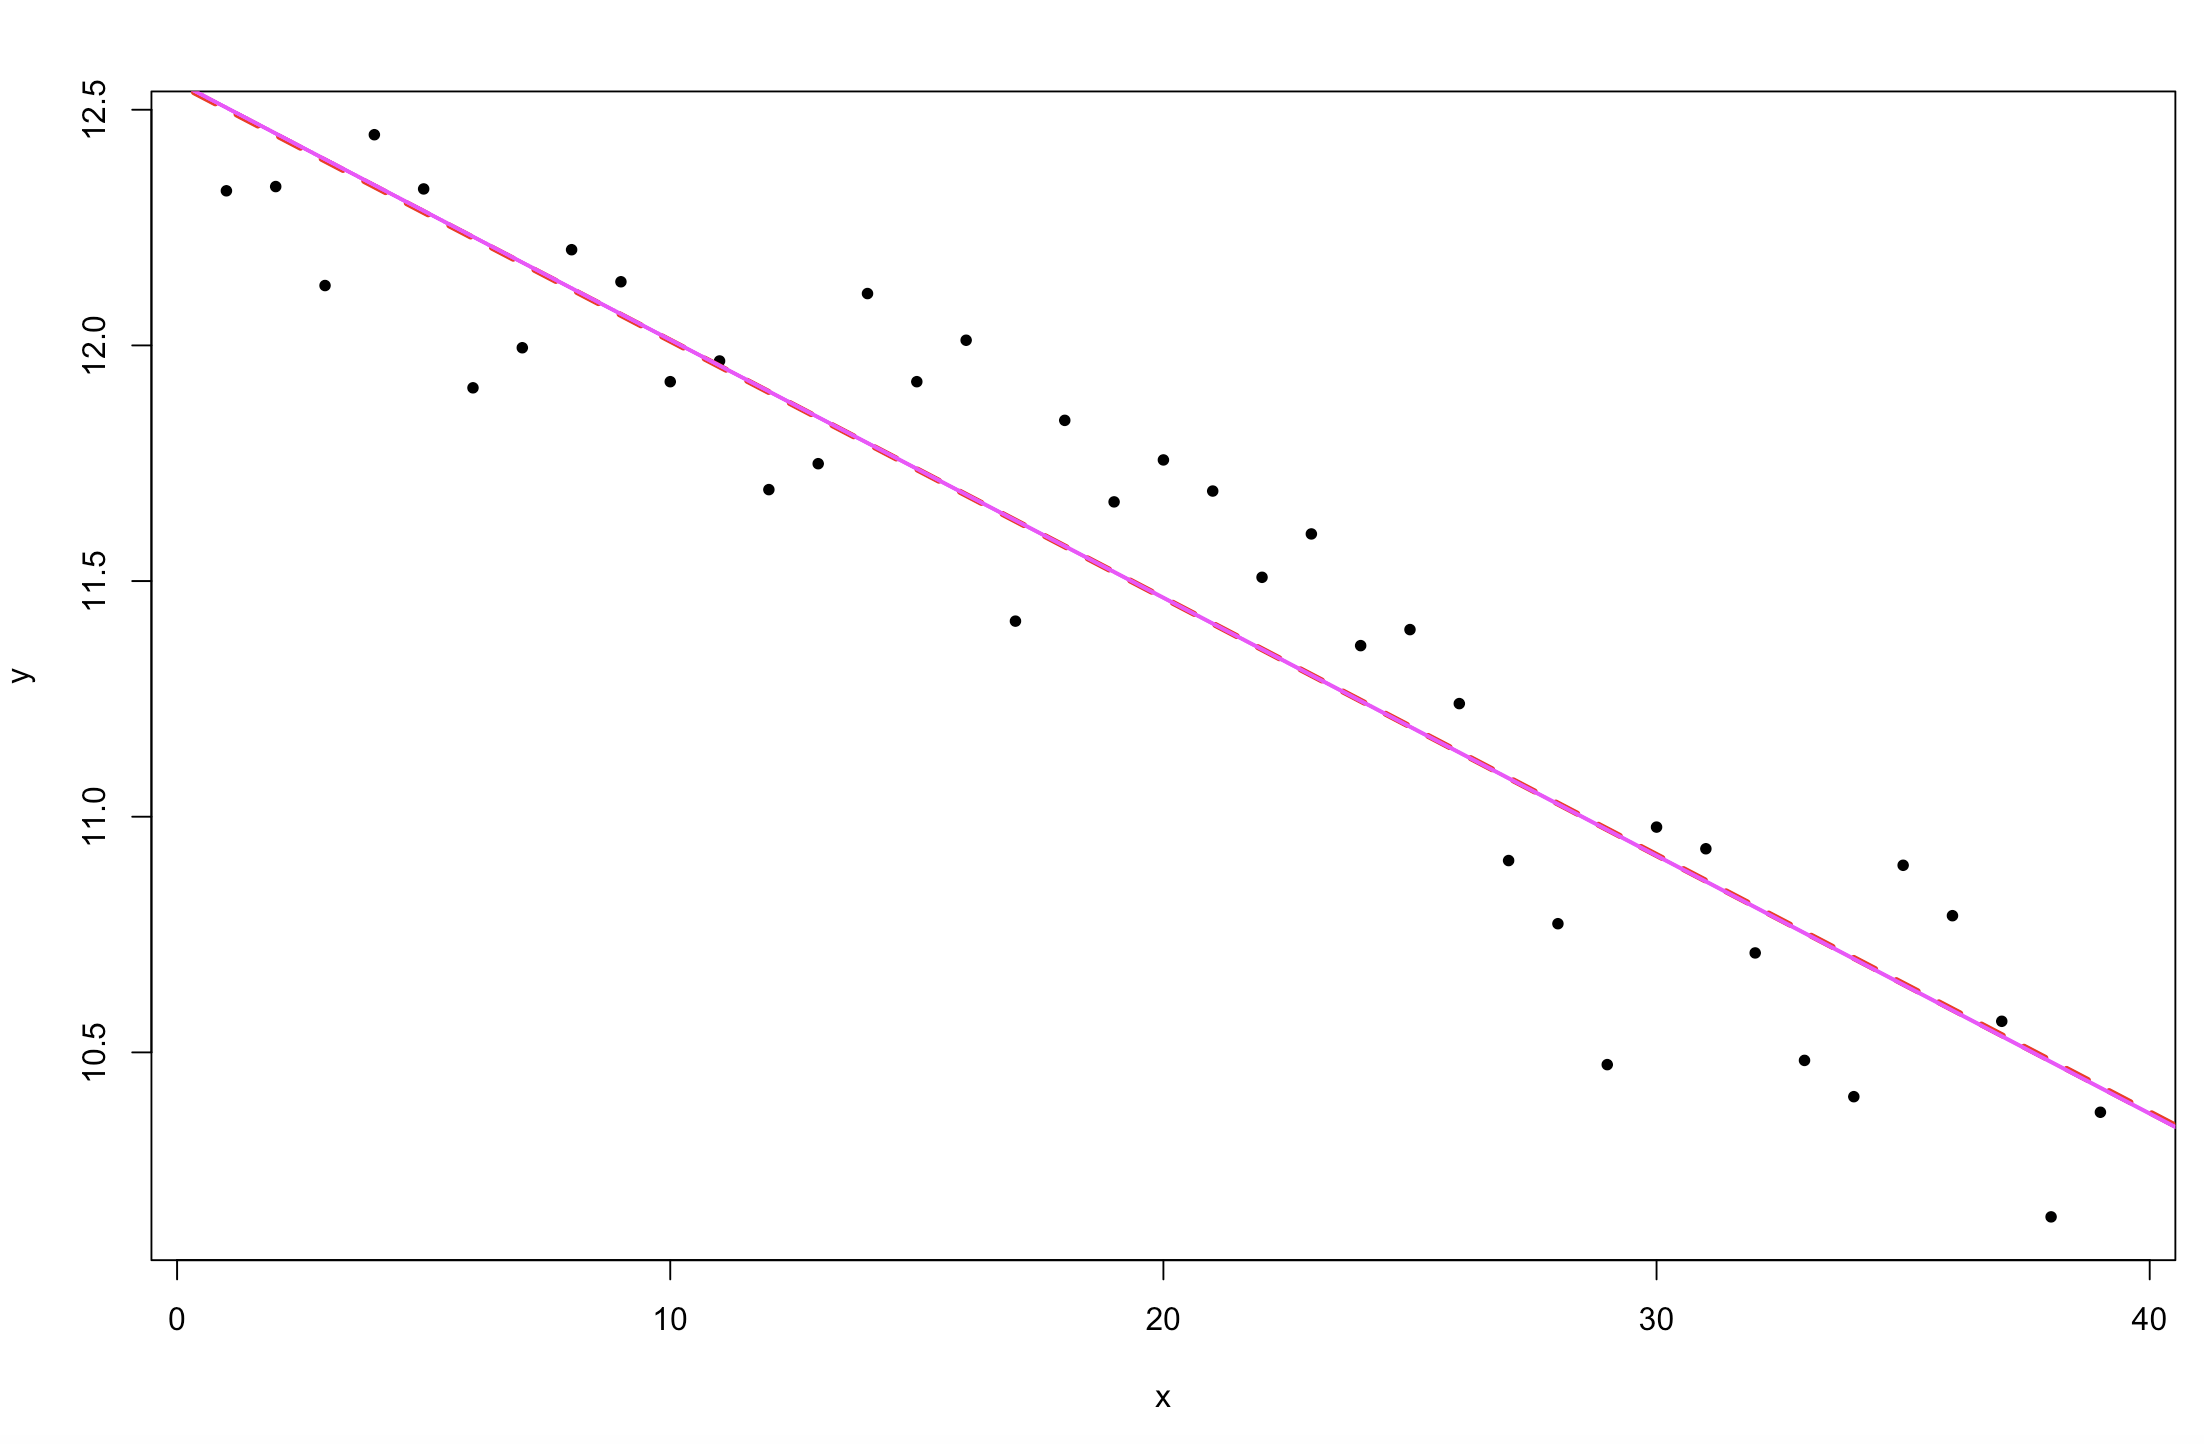 Posterior estimates vs lm output